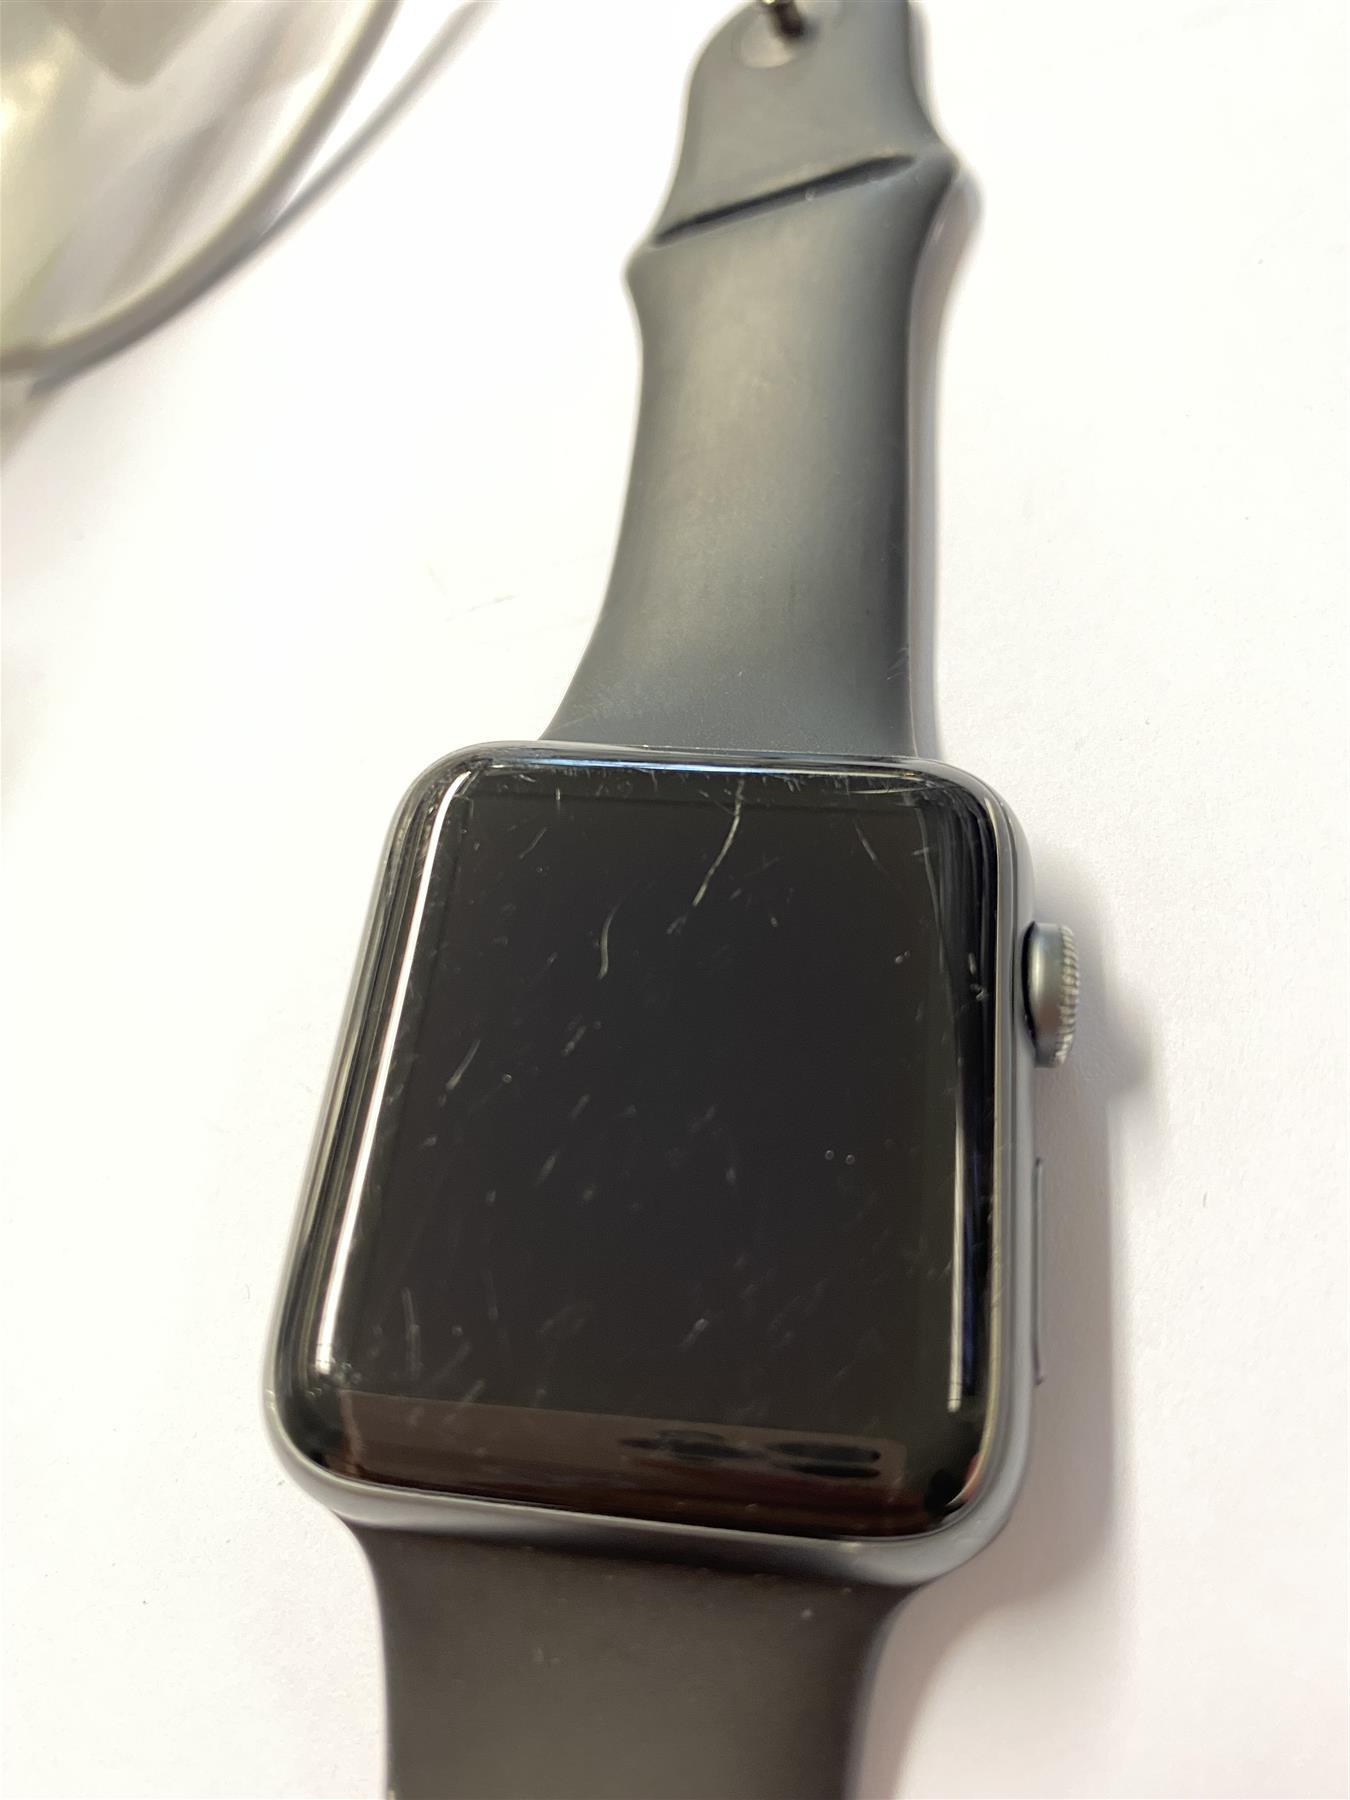 Apple Watch Series 3 42mm GPS Space Grey Aluminium - Used